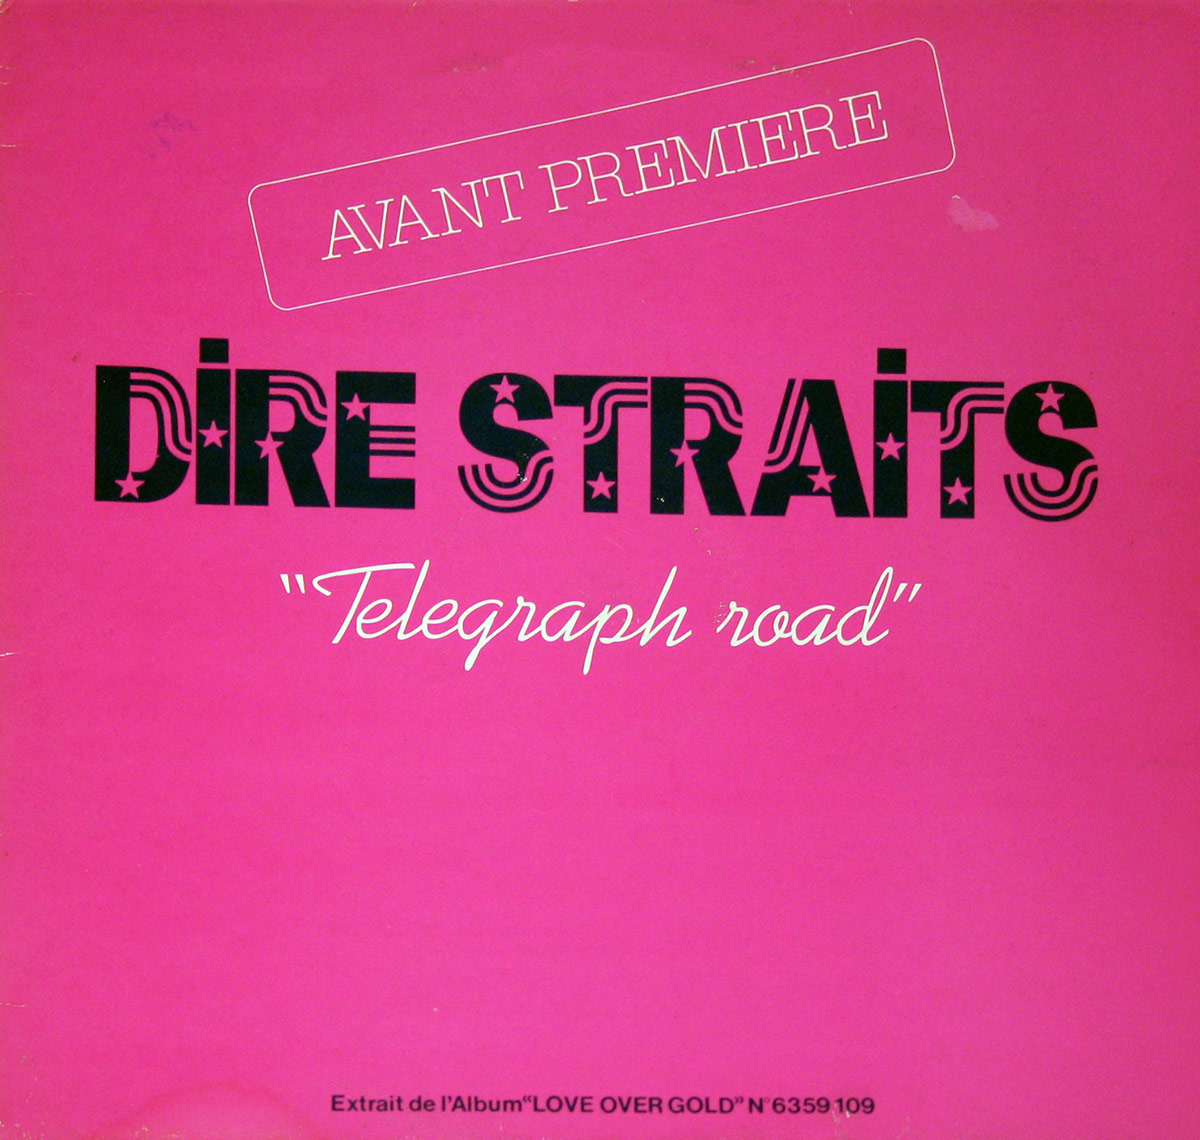 Album cover photos of : Dire Straits Telegraph Road 12" Promo Single